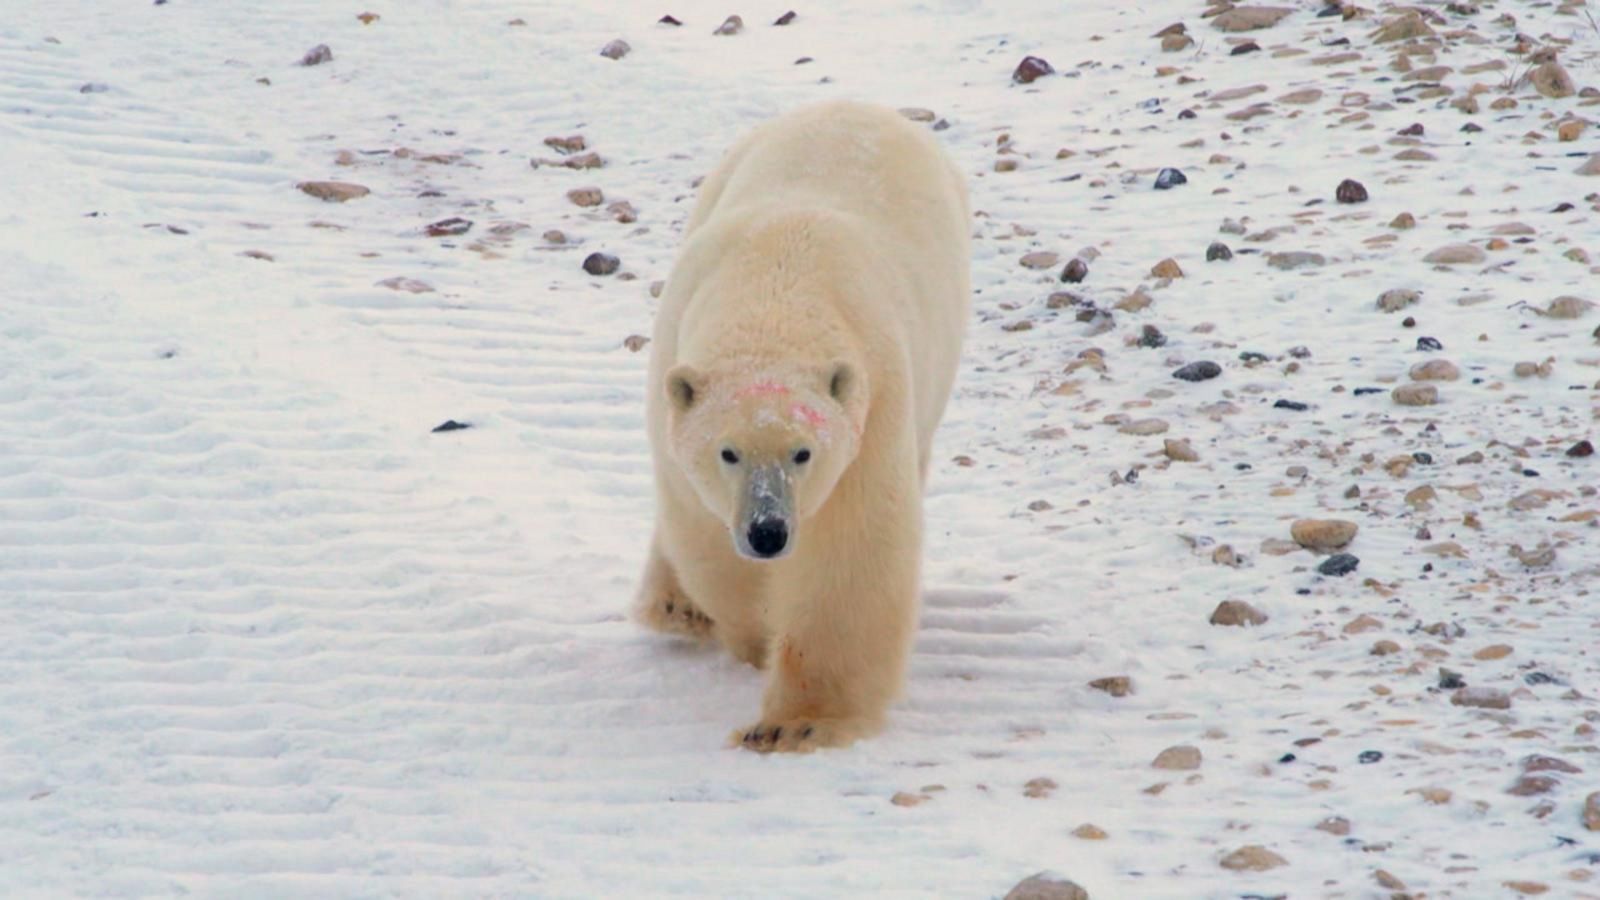 VIDEO: Michael Strahan visits ‘polar bear capital of the world’